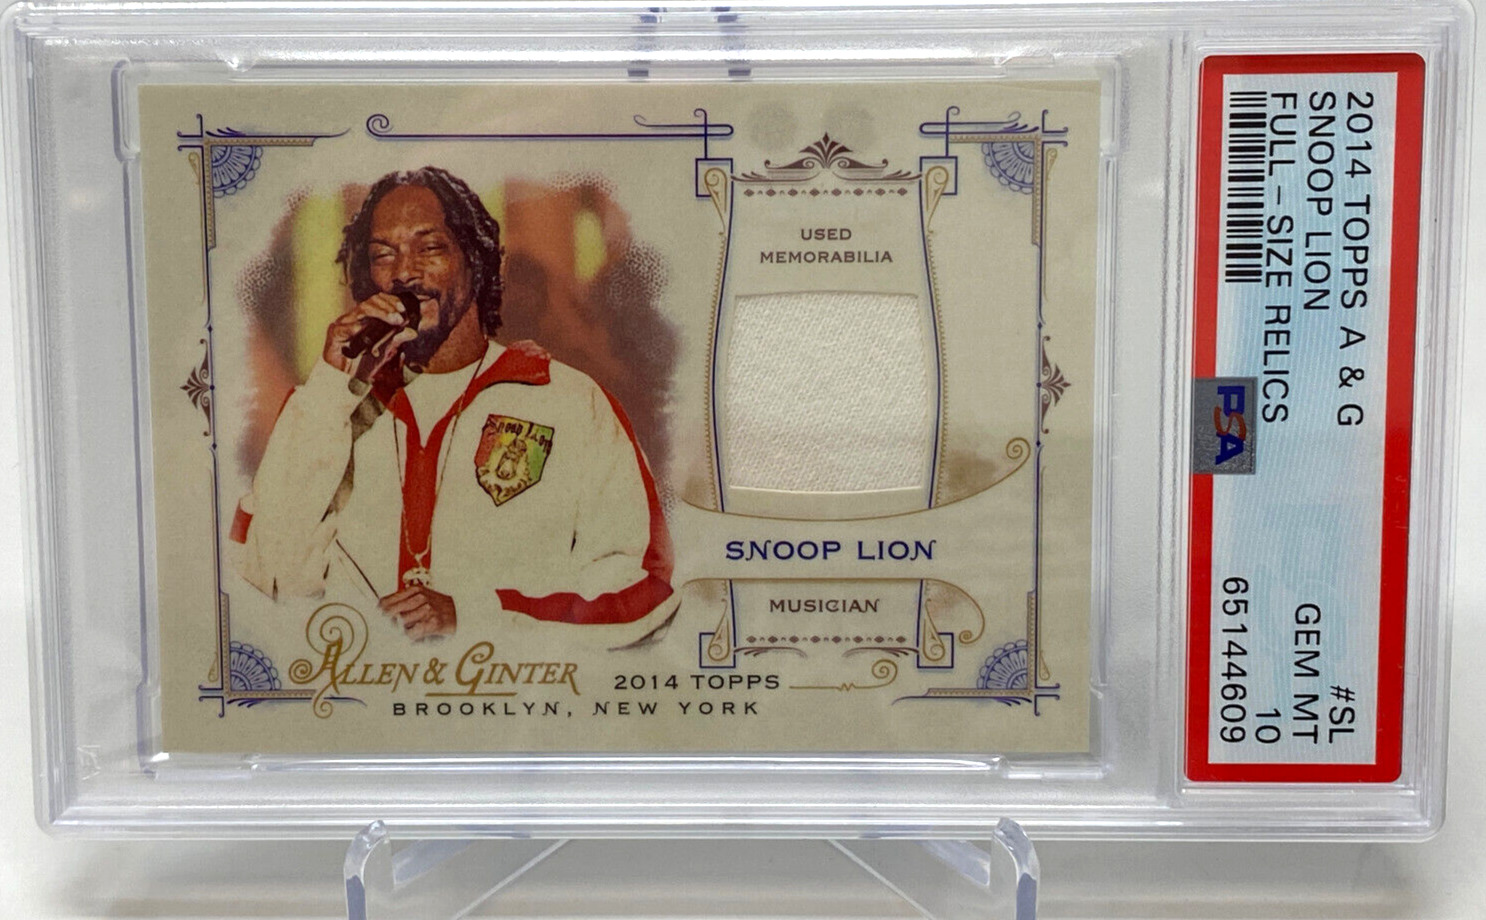 2014 Topps A & G Snoop Lion #SL ~ PSA 10 ~ VERY LOW POP 4 ~ Used Memorabilia